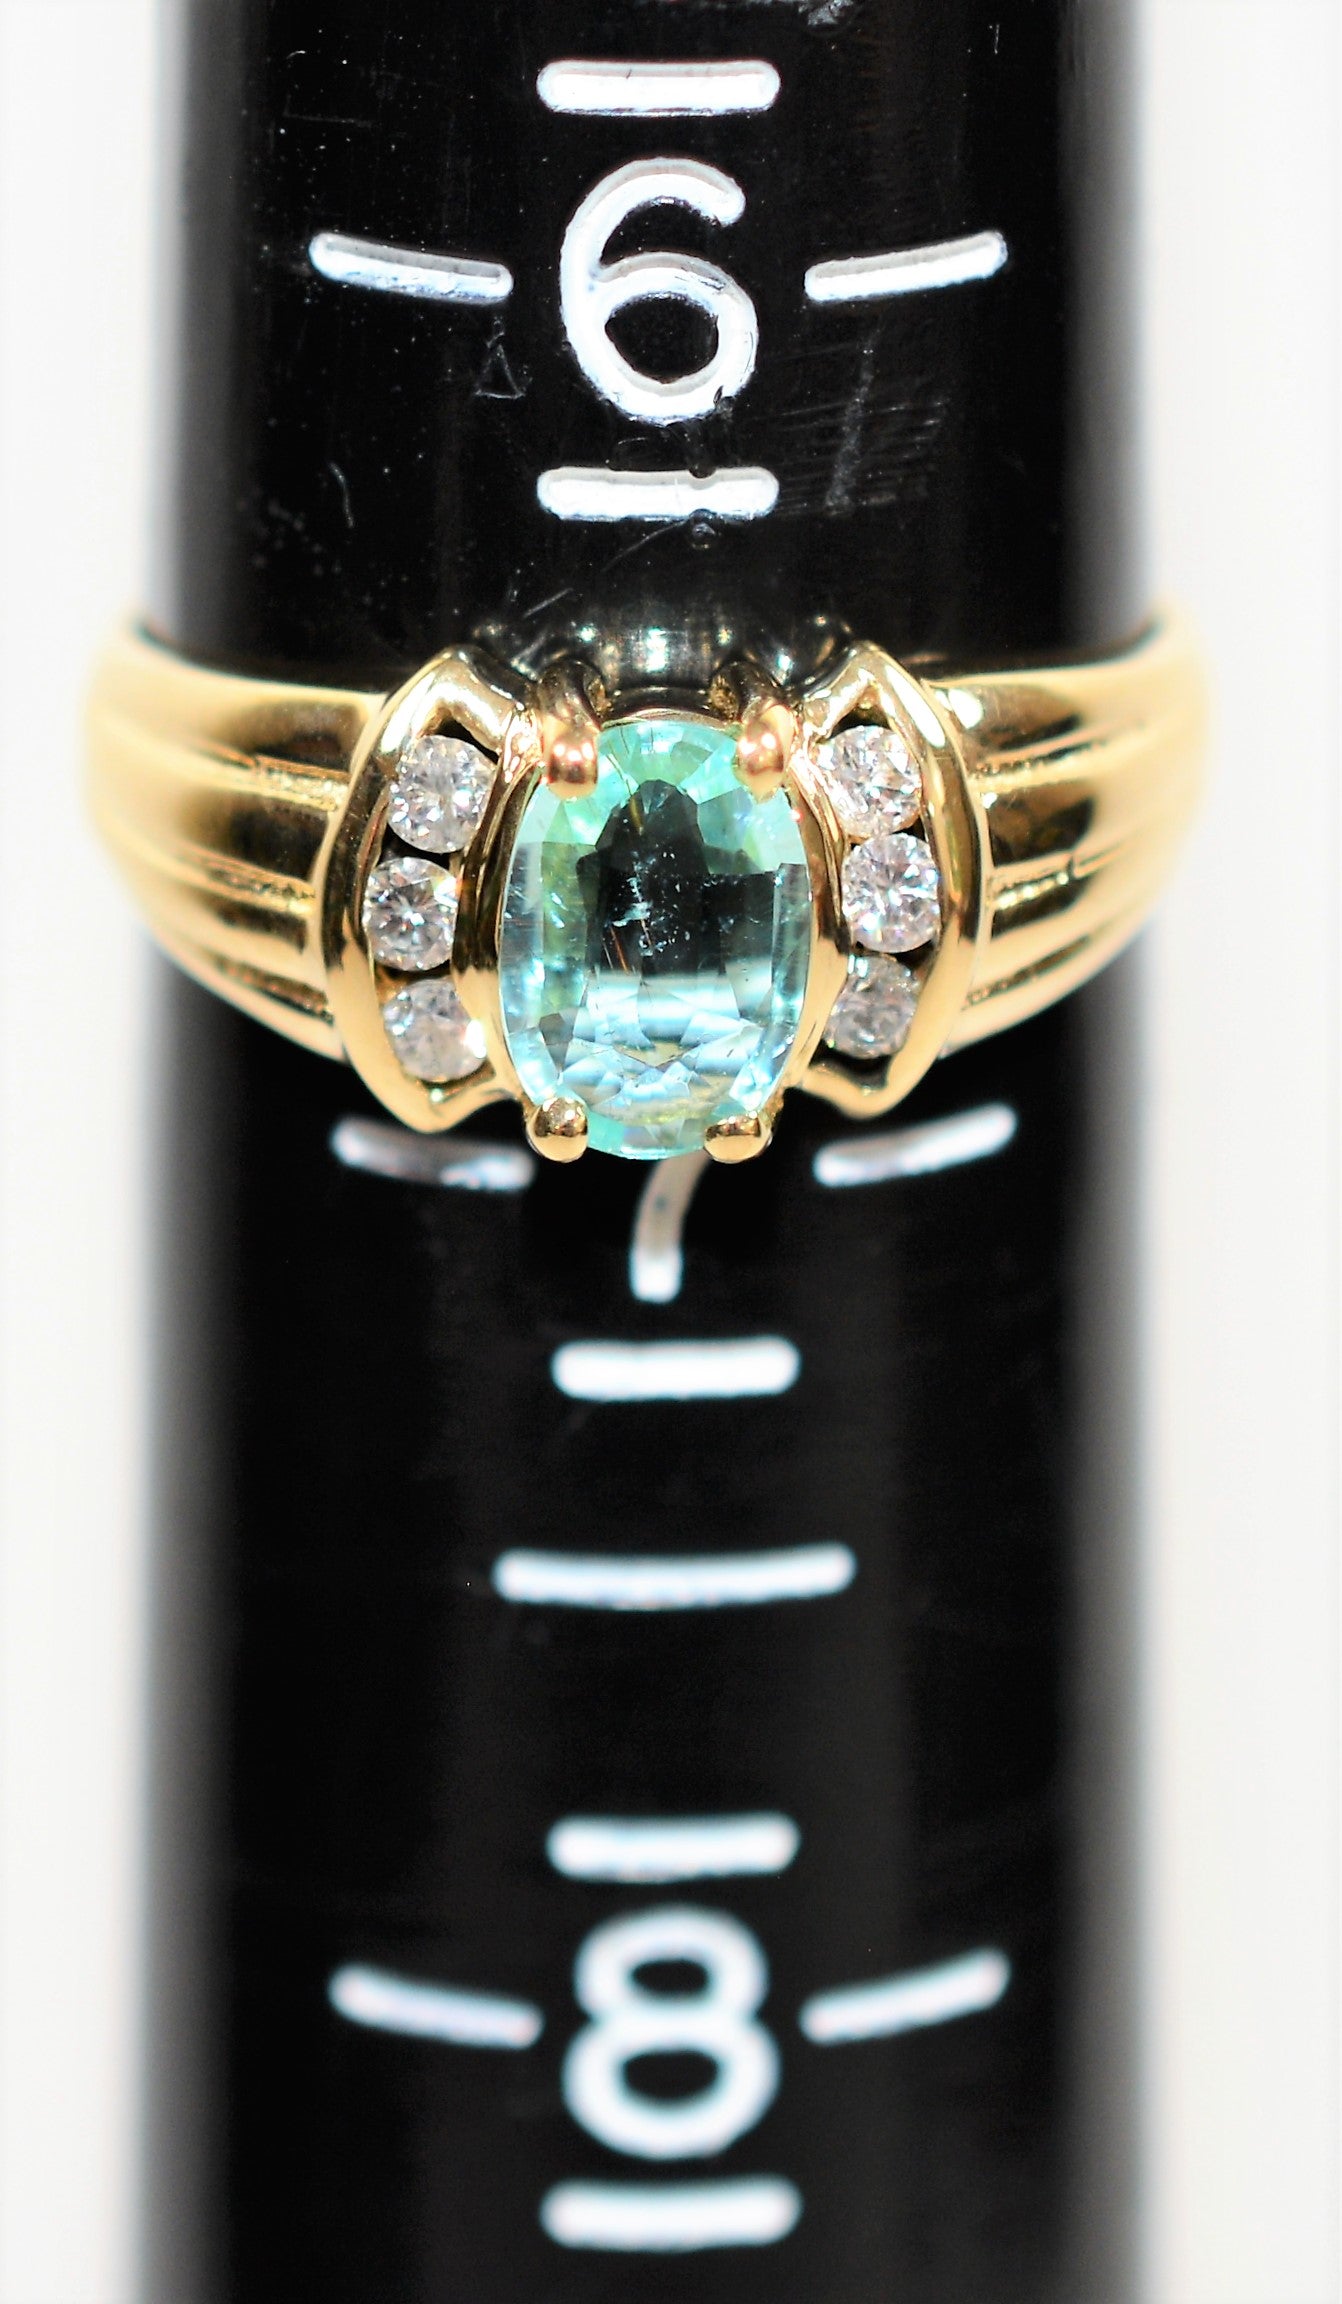 Natural Paraiba Tourmaline & Diamond Ring 14K Solid Gold .64tcw Gemstone Jewellery Women's Ring Birthstone Ring Statement Ring Fine Jewelry